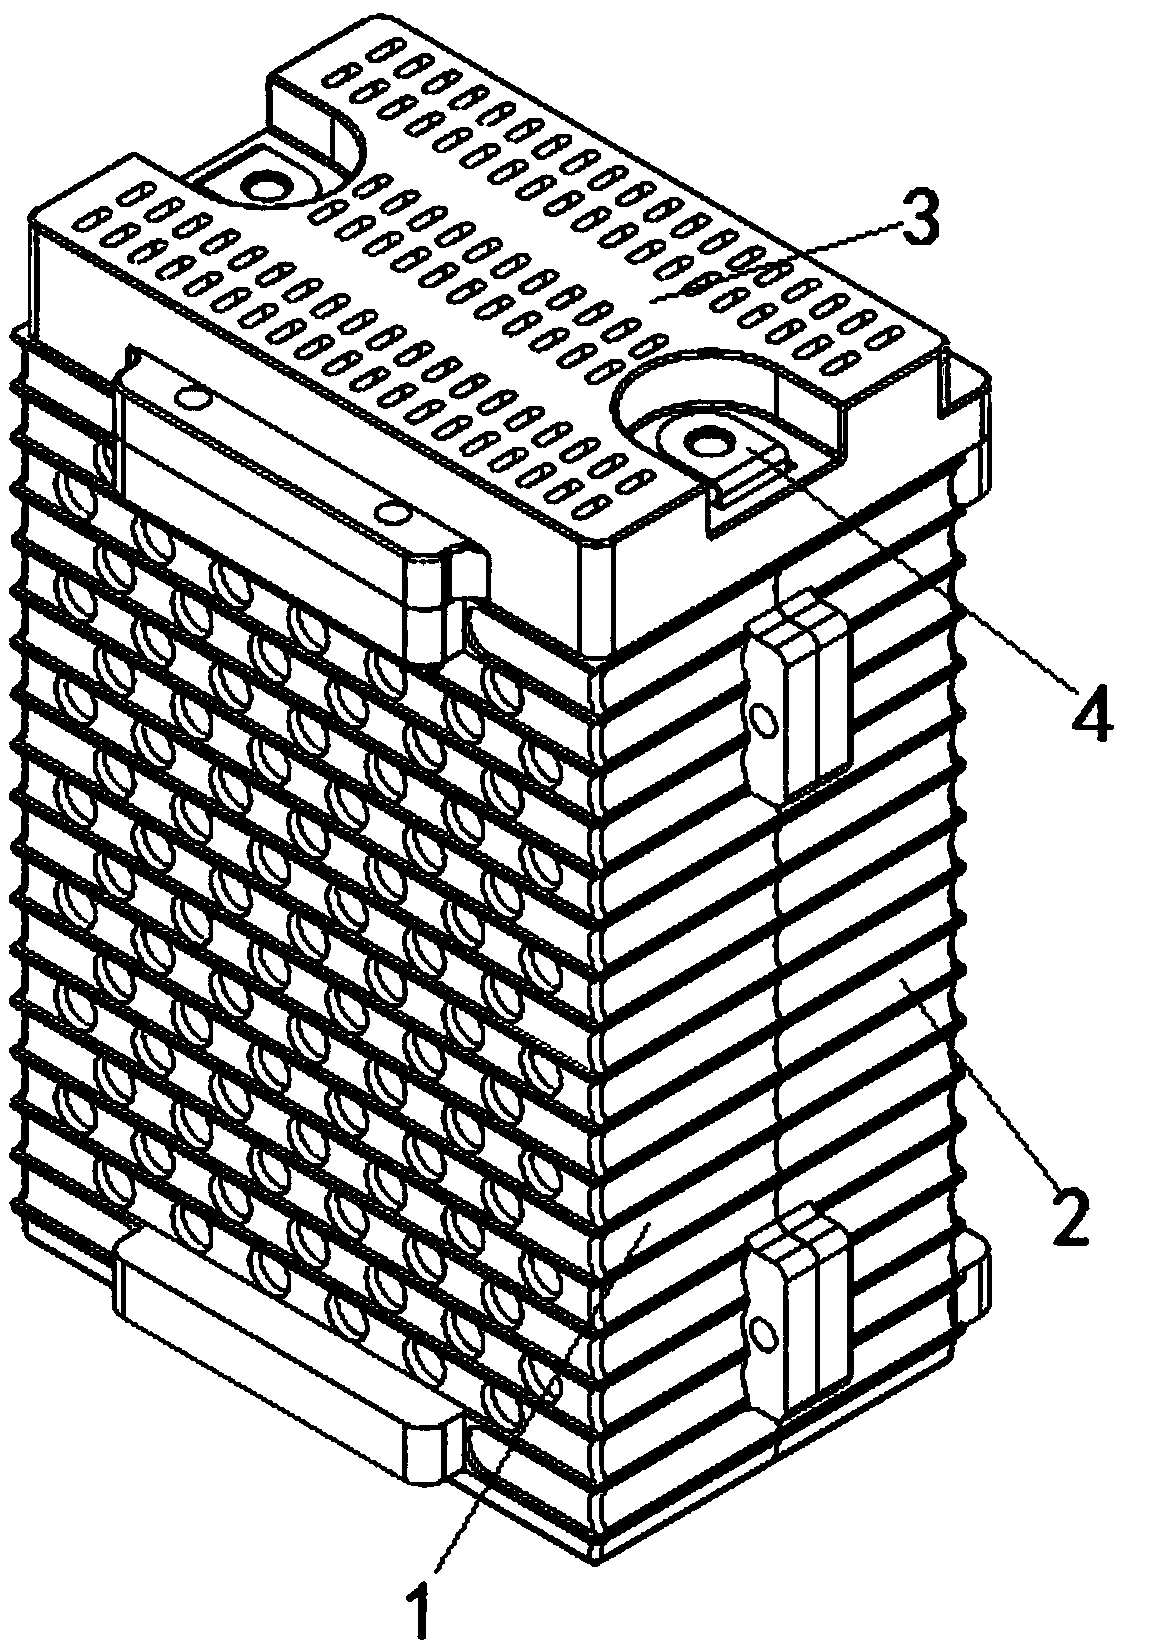 Novel square lithium battery standardized module encapsulation case and PACK method